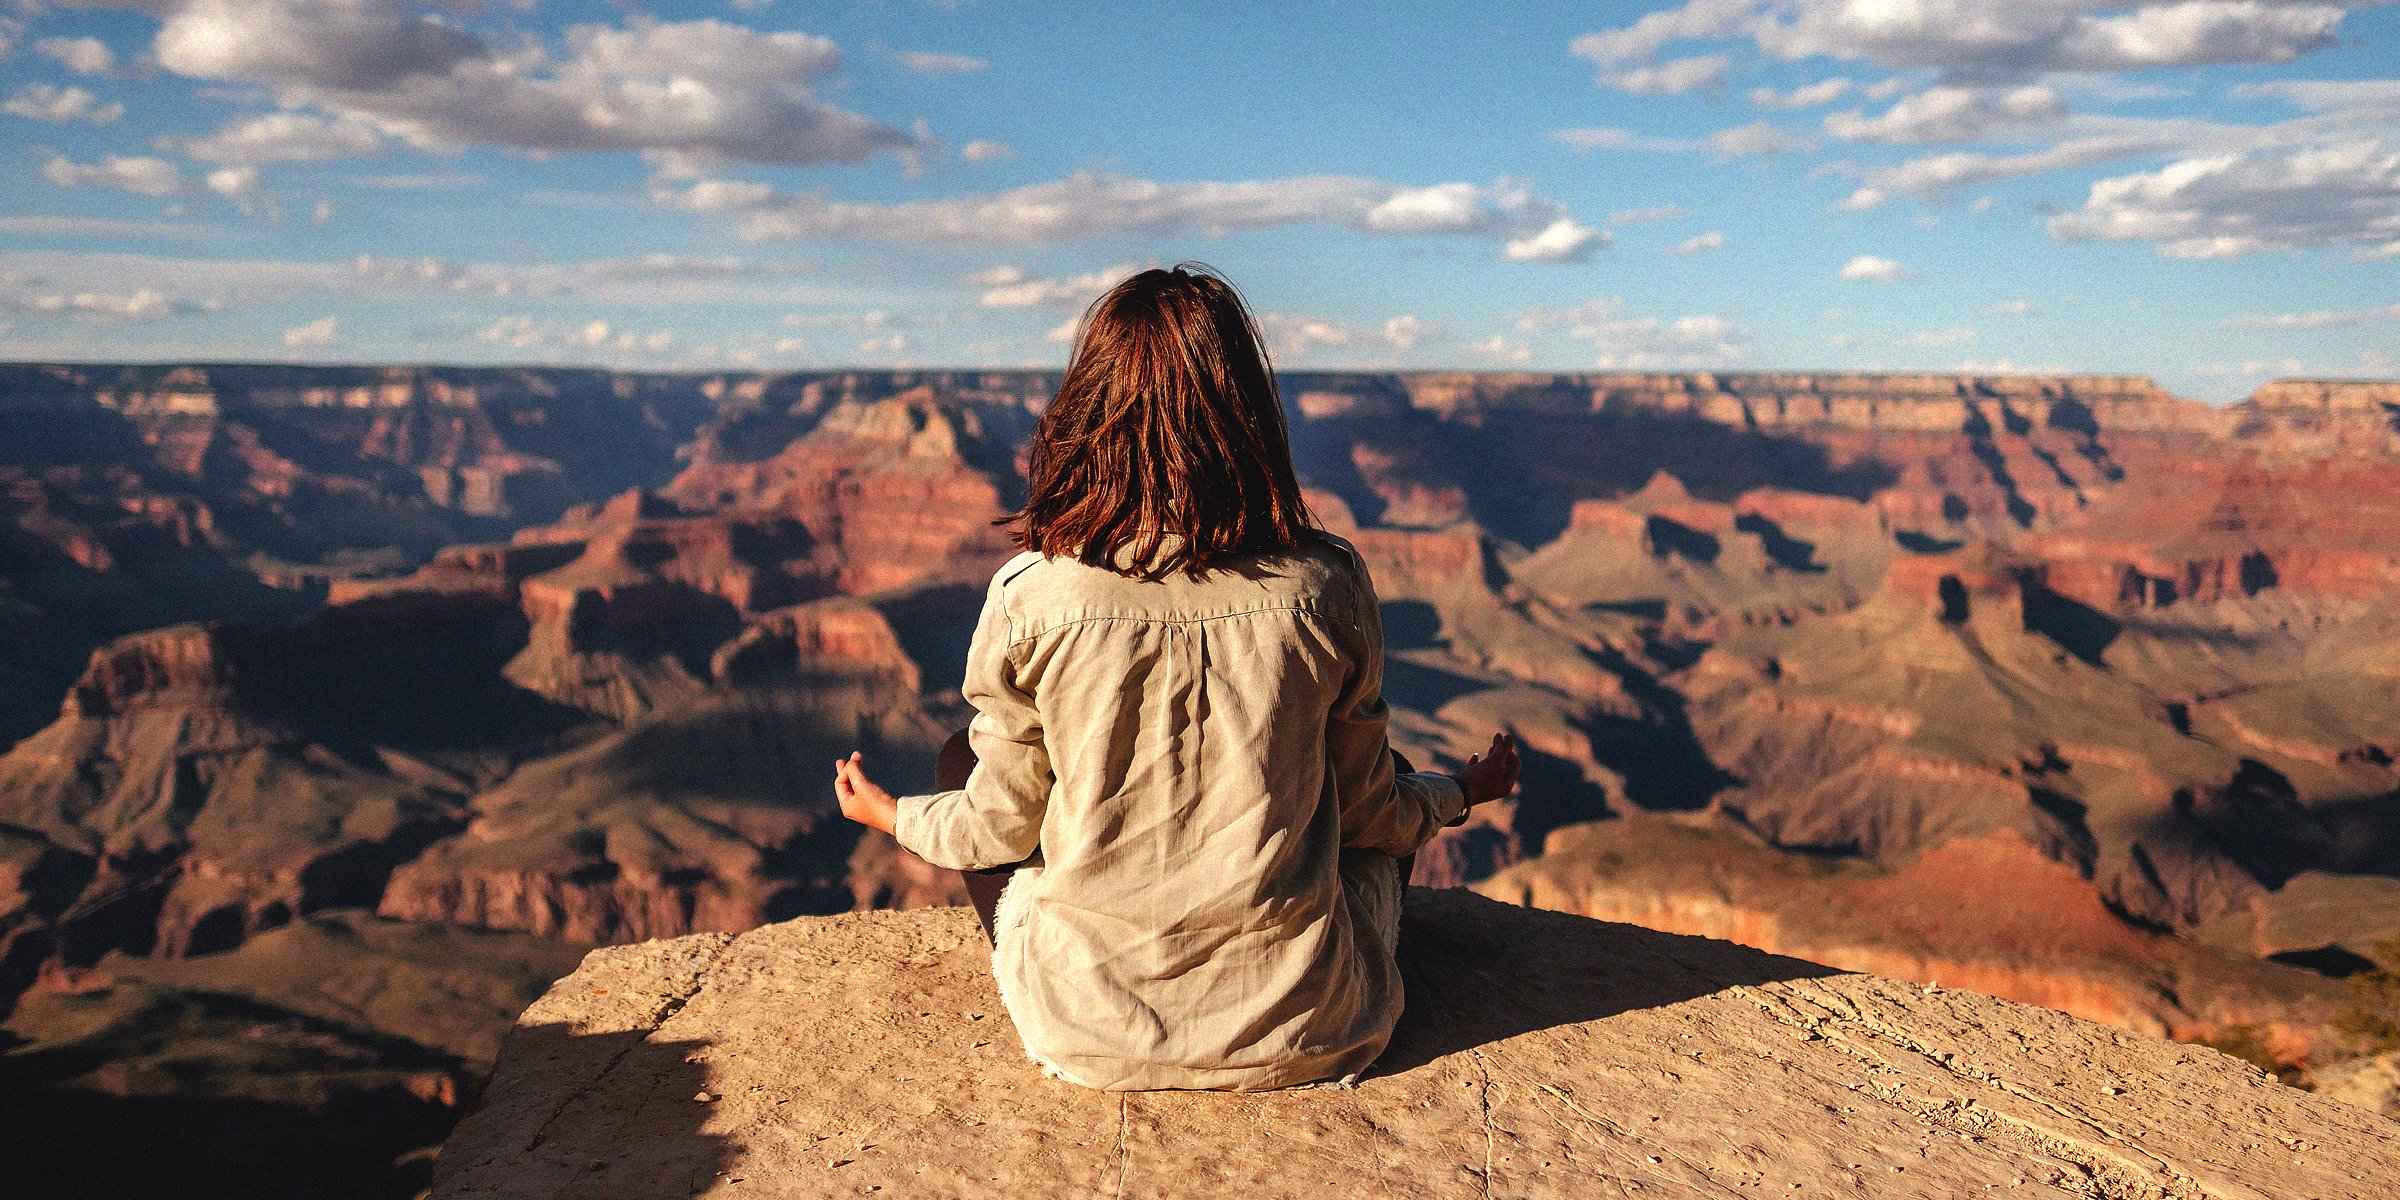 Woman meditating on a mountain | Source: Unsplash